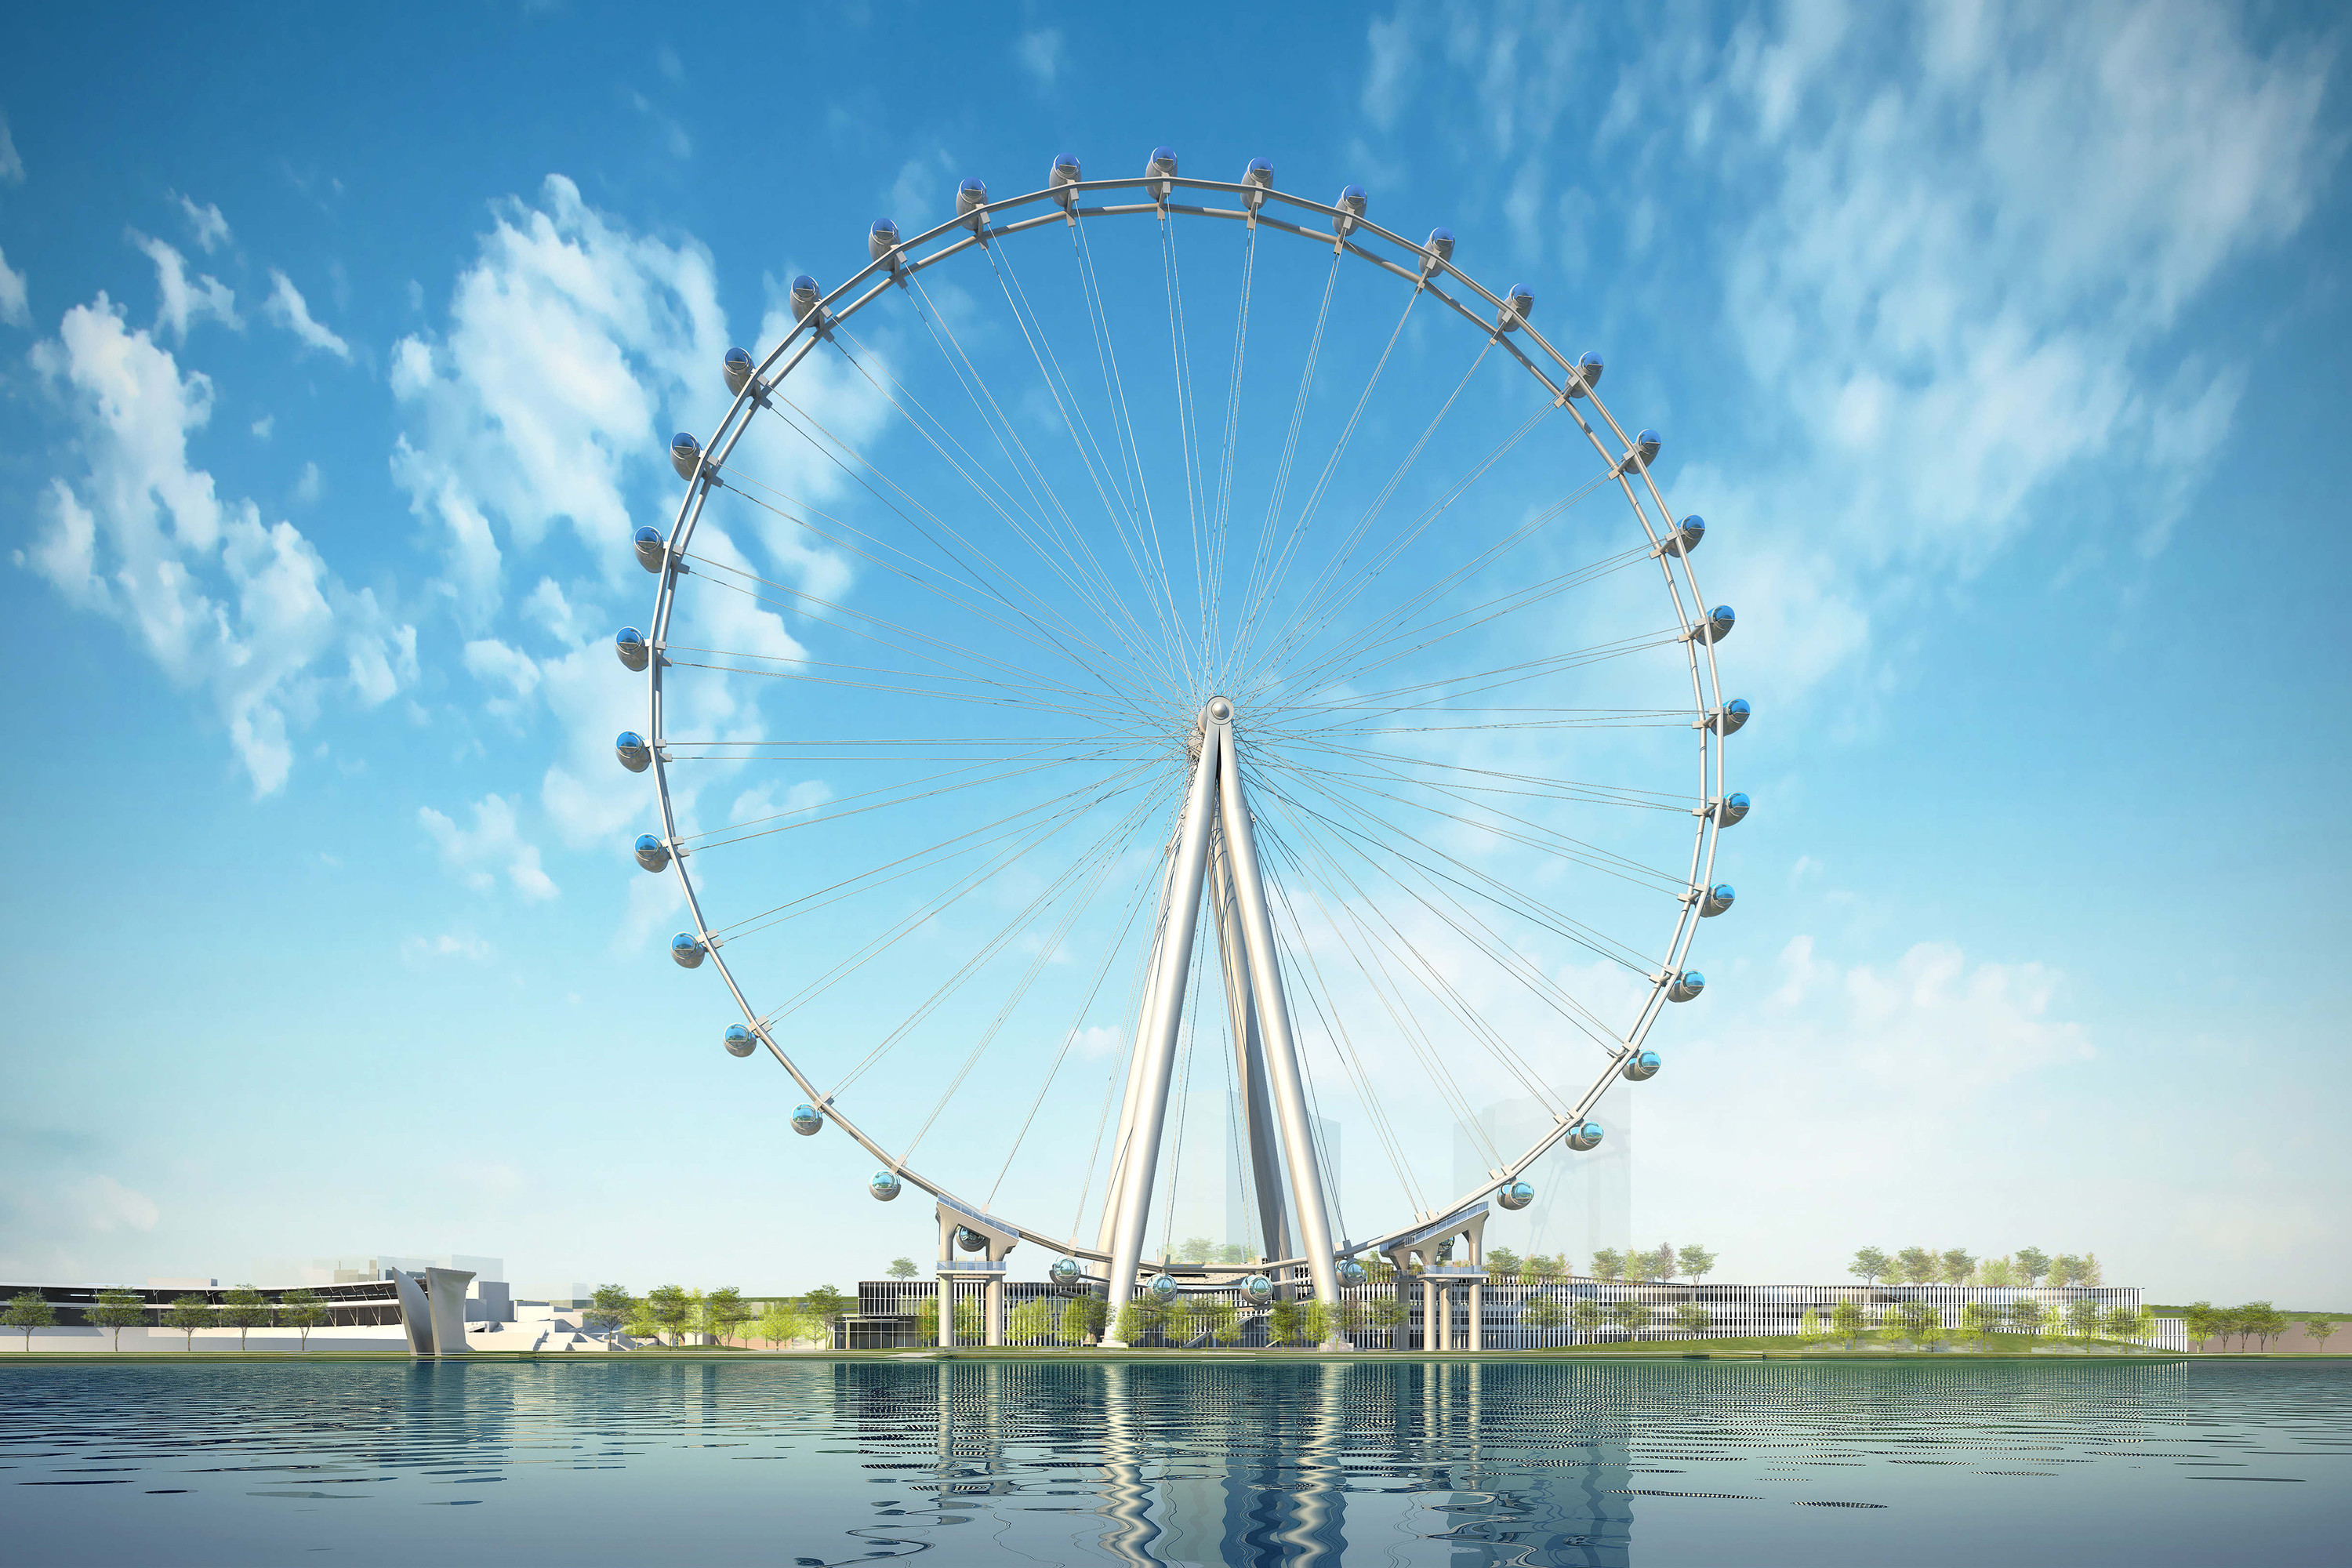 Staten Island Ferris wheel project on hold indefinitely